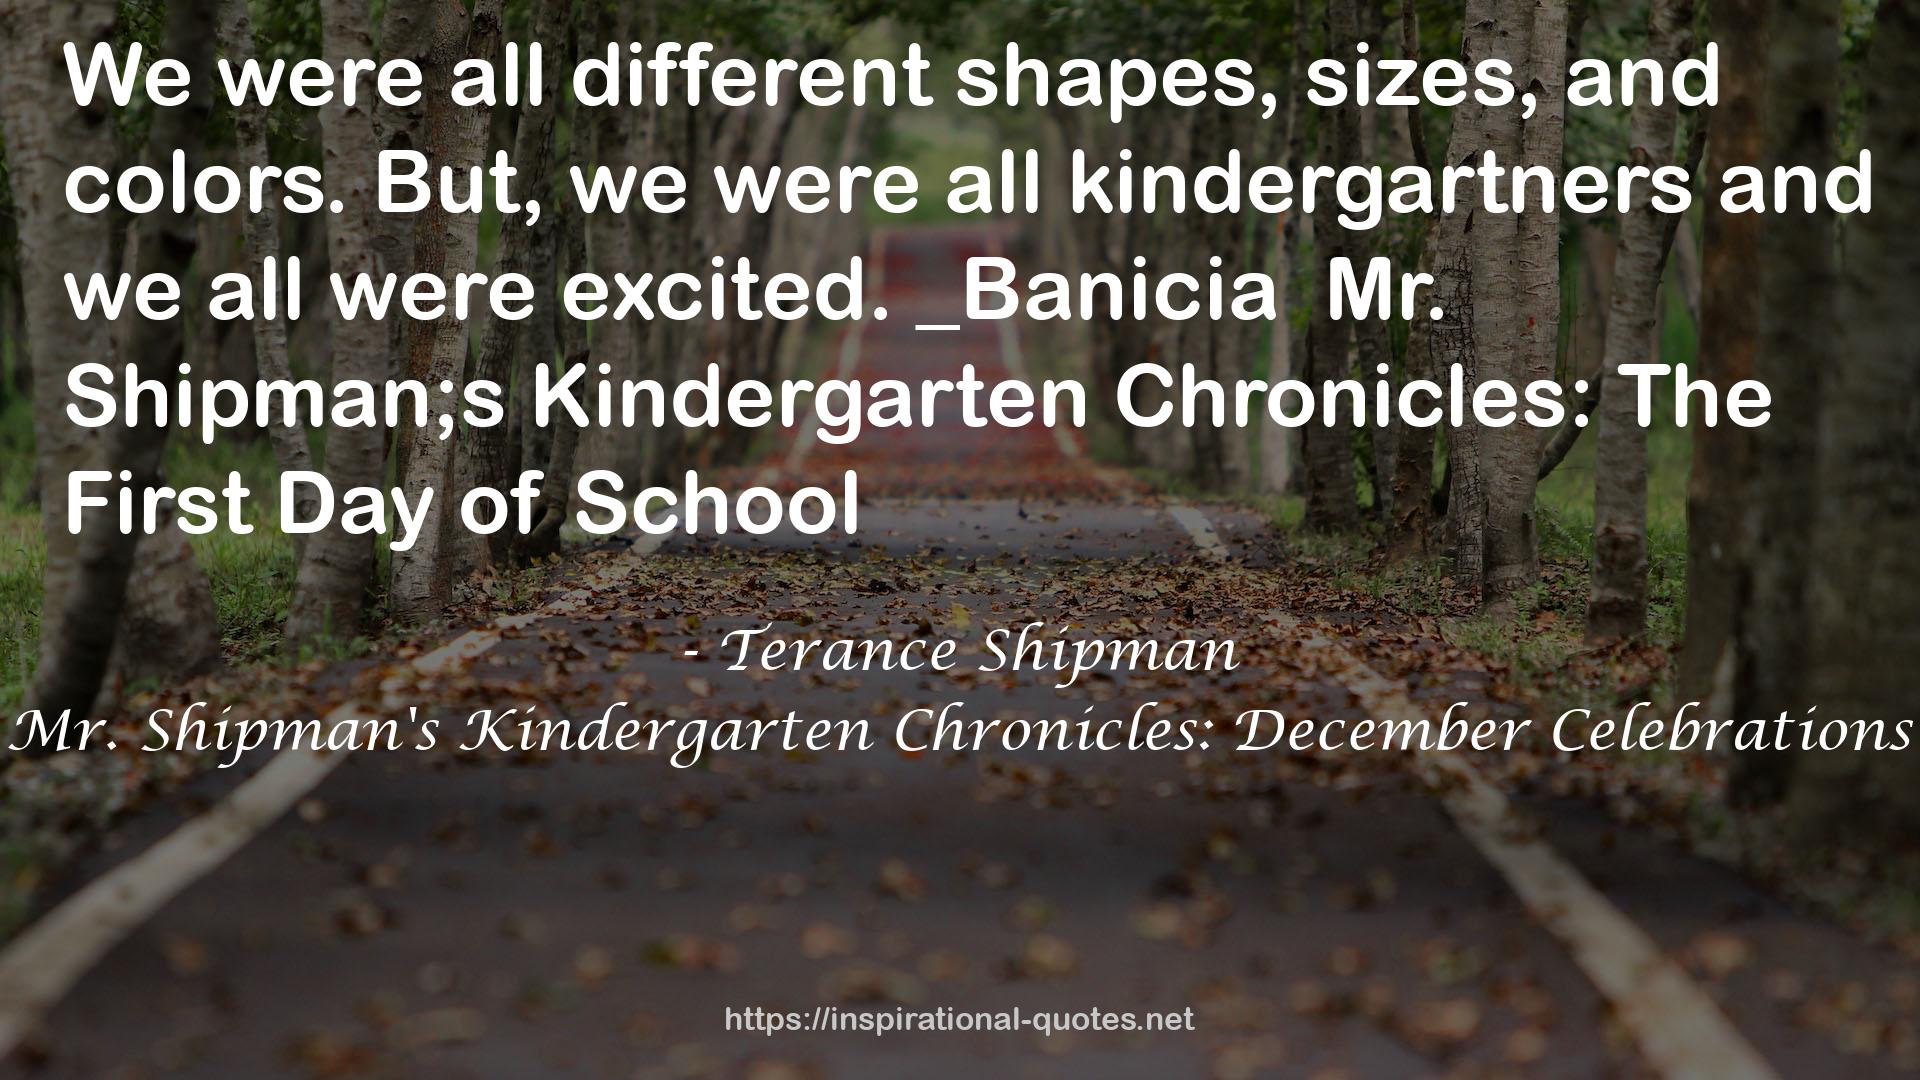 Mr. Shipman's Kindergarten Chronicles: December Celebrations QUOTES